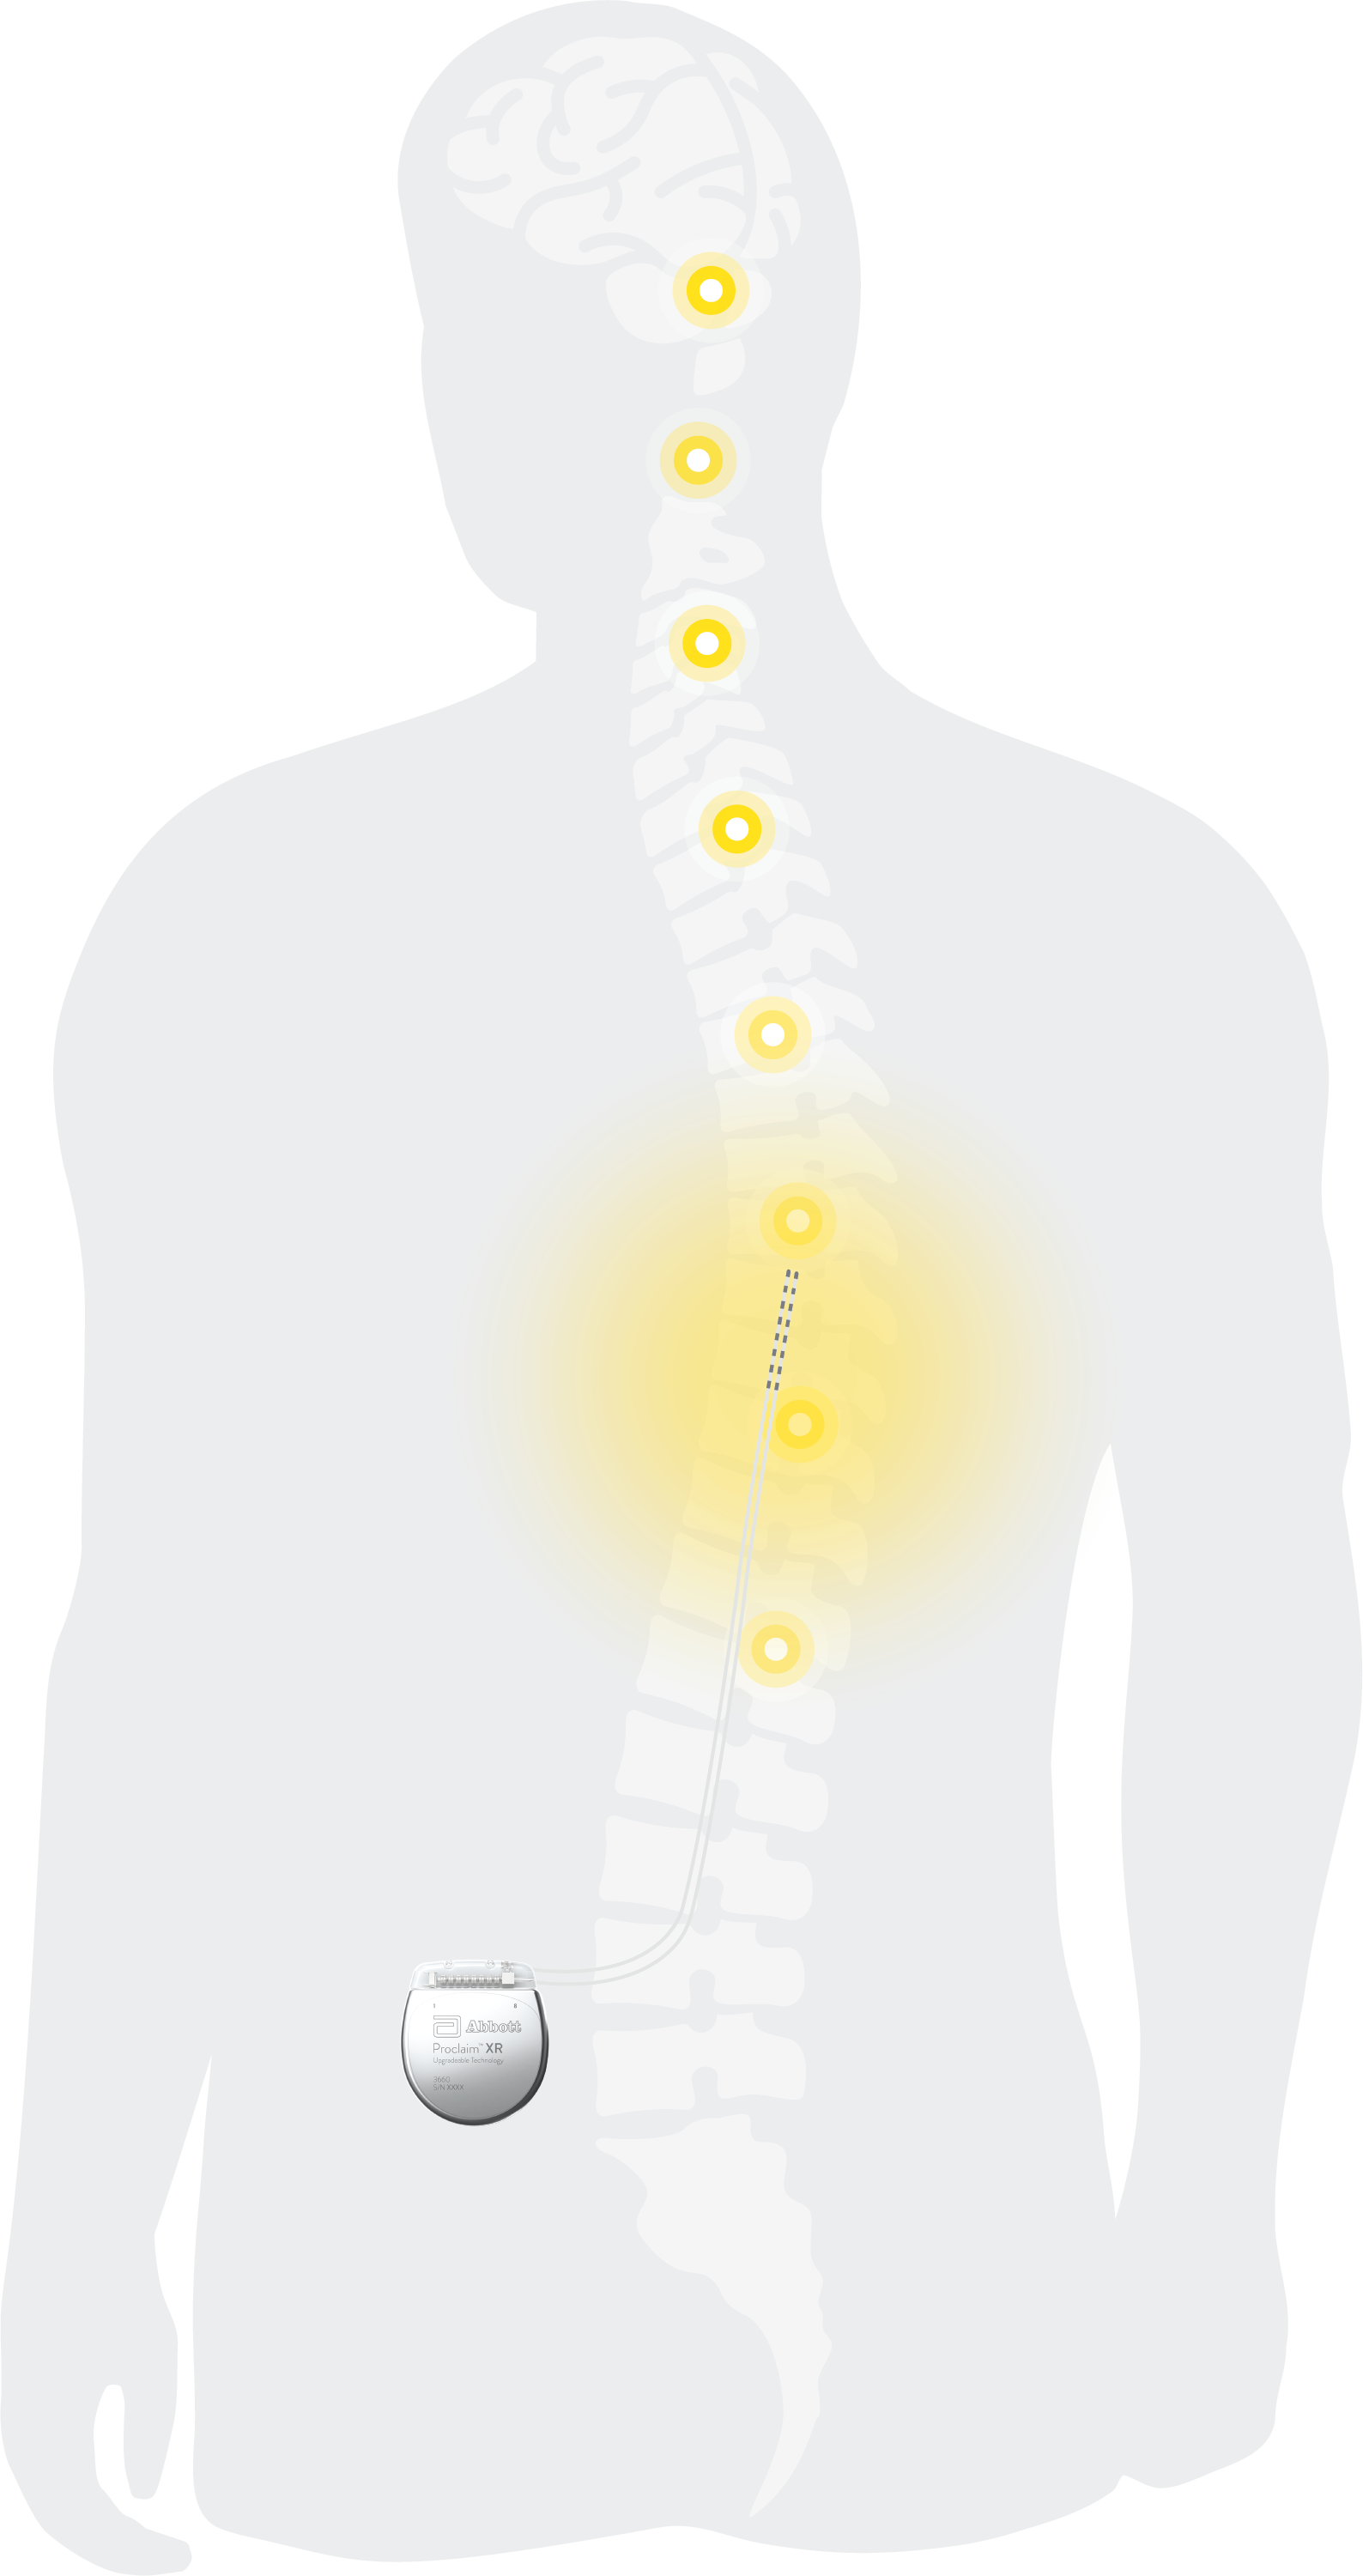 abbott spinal cord stimulator fda approval